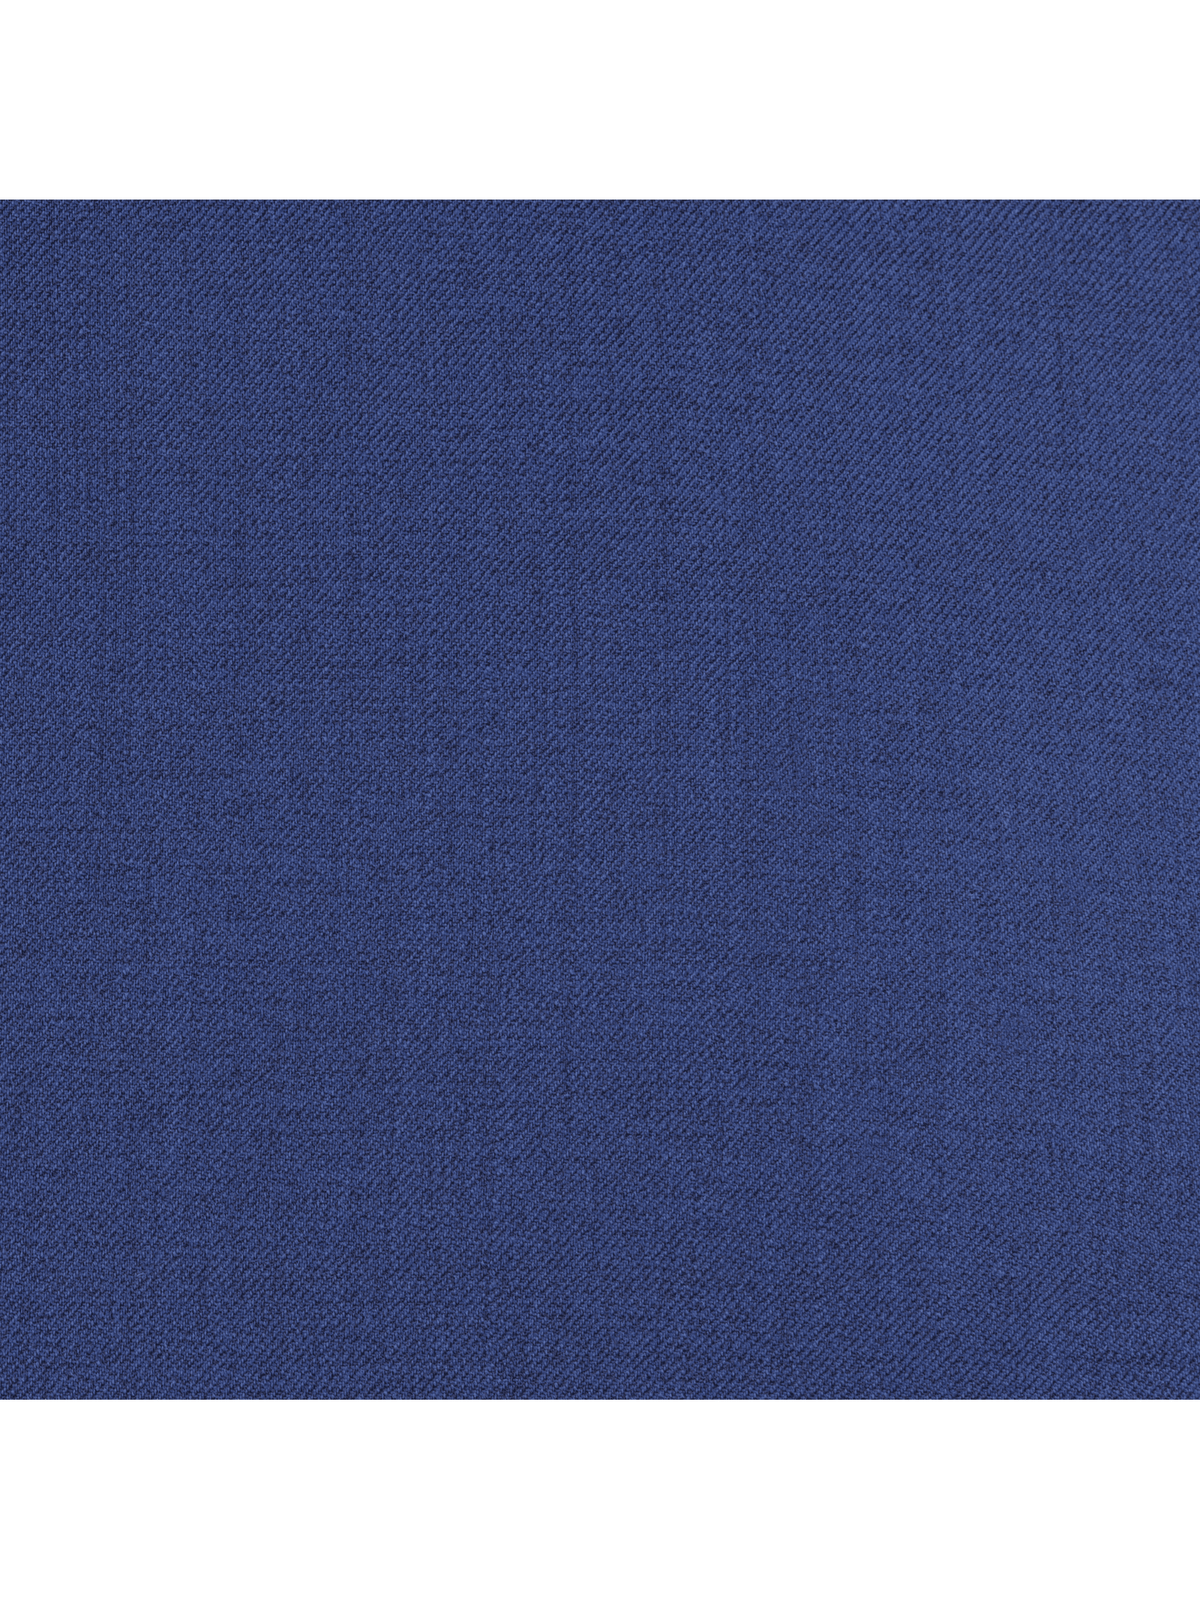 close up of dark blue gabardine fabric